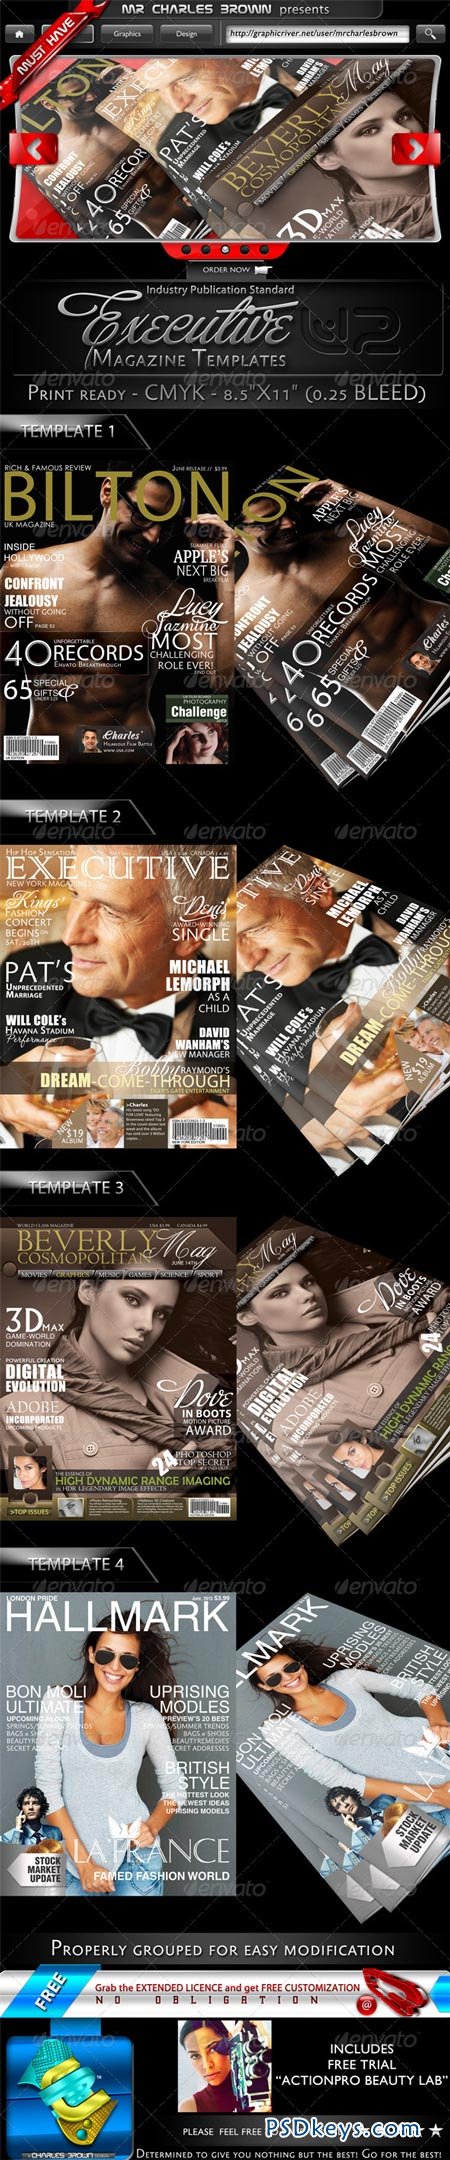 4 Executive Magazine Templates V2 1404937